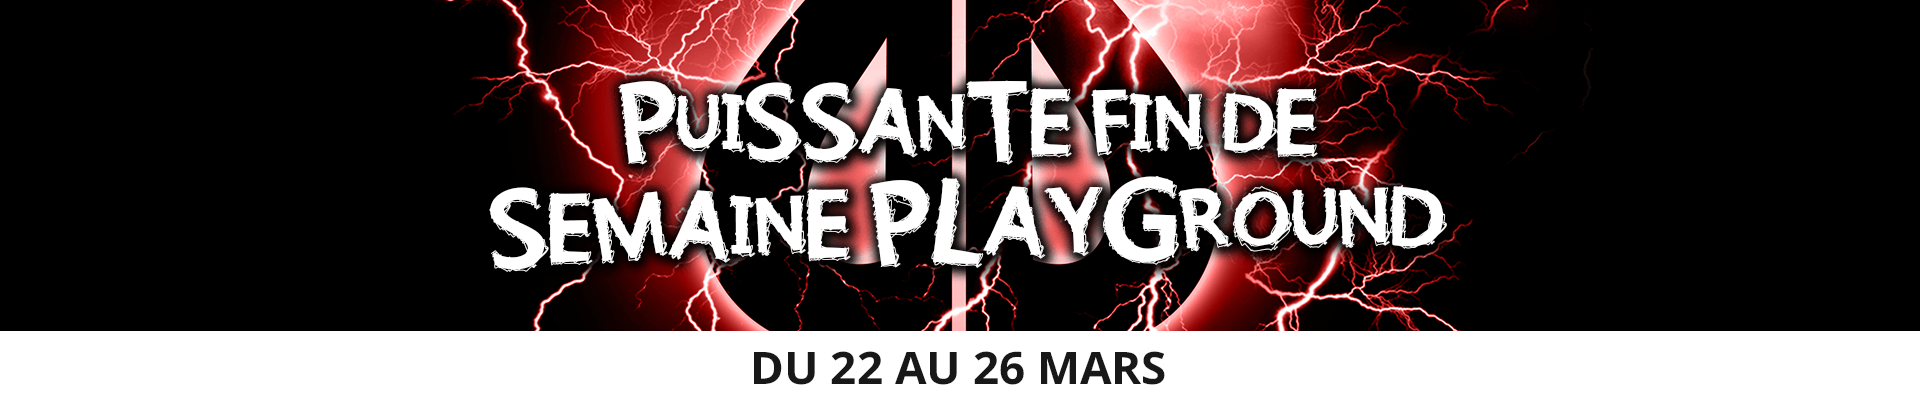 Puissante Fin De Semaine Playground Mars 2018